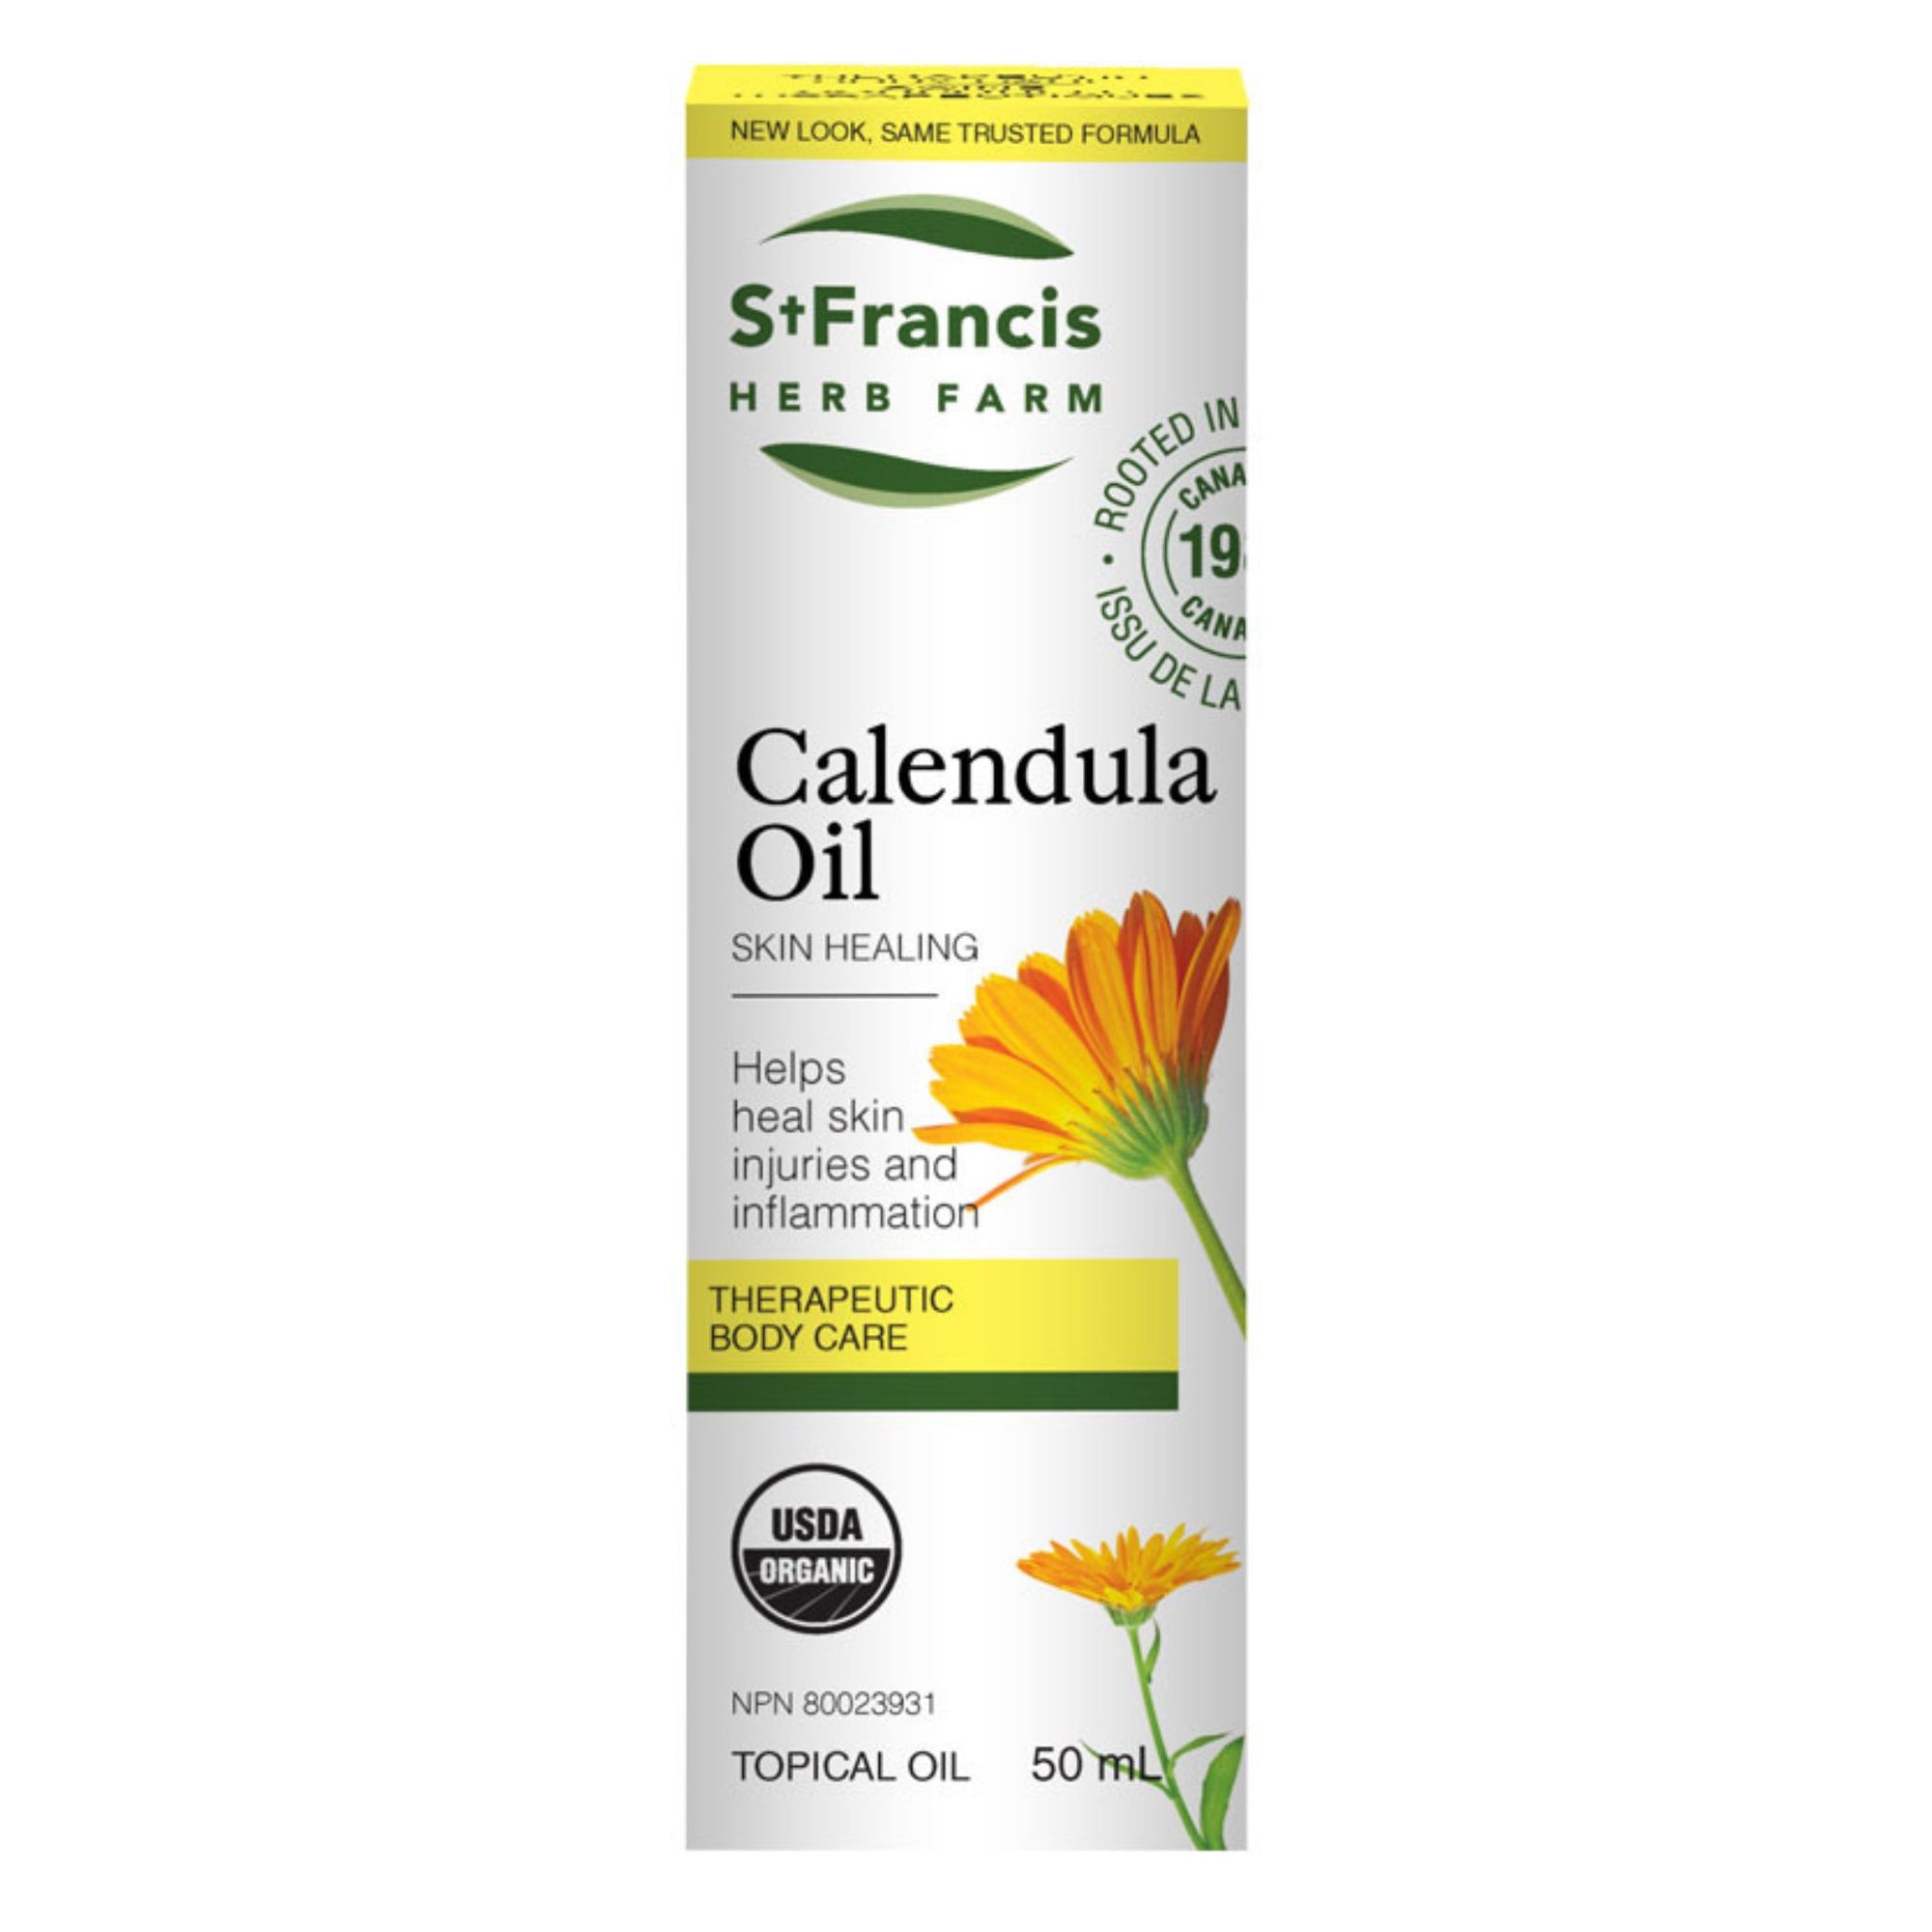 St. Francis Calendula Oil 50ml